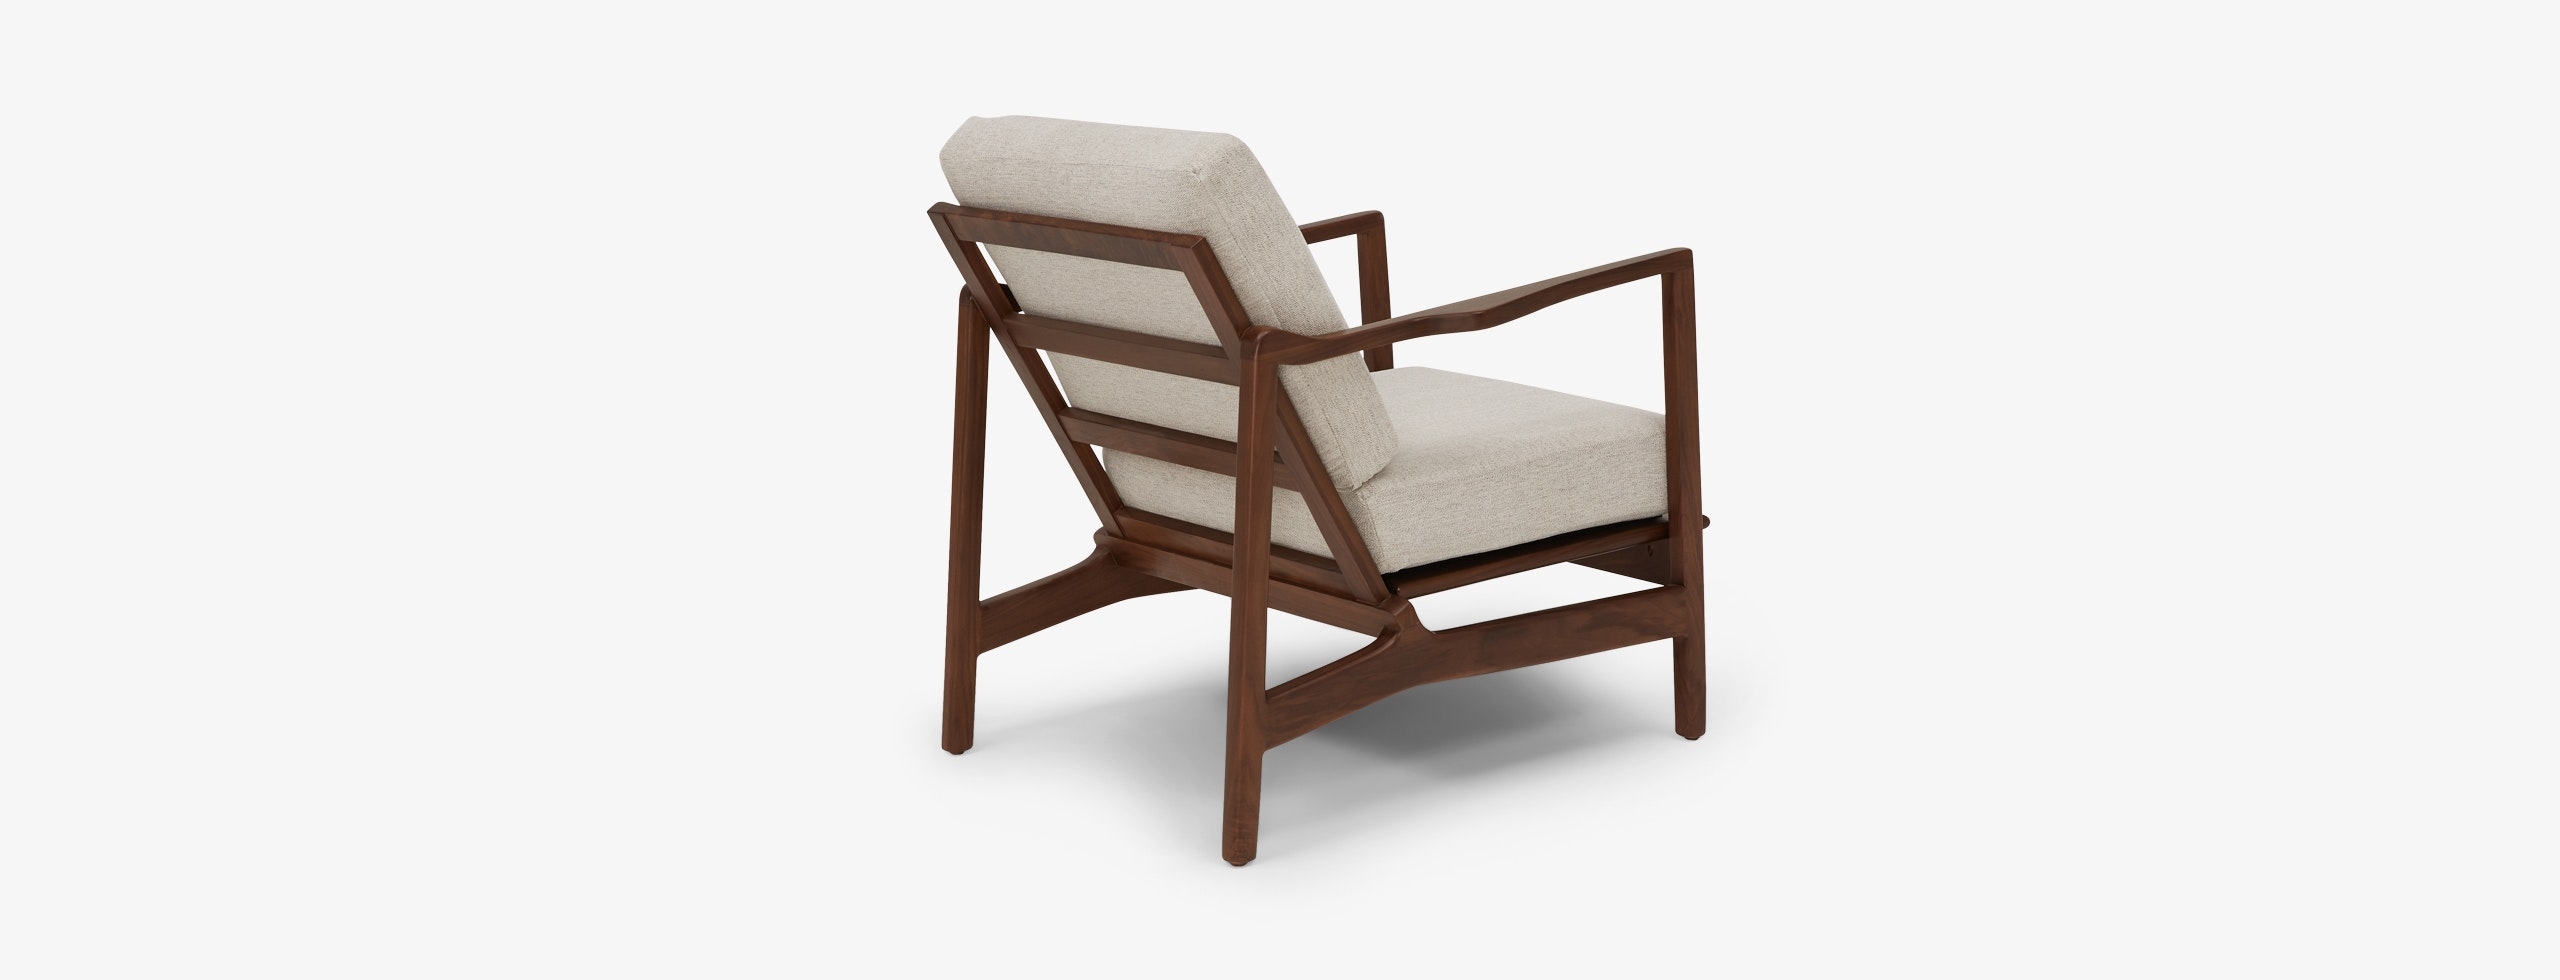 Graham Chair - Image 2